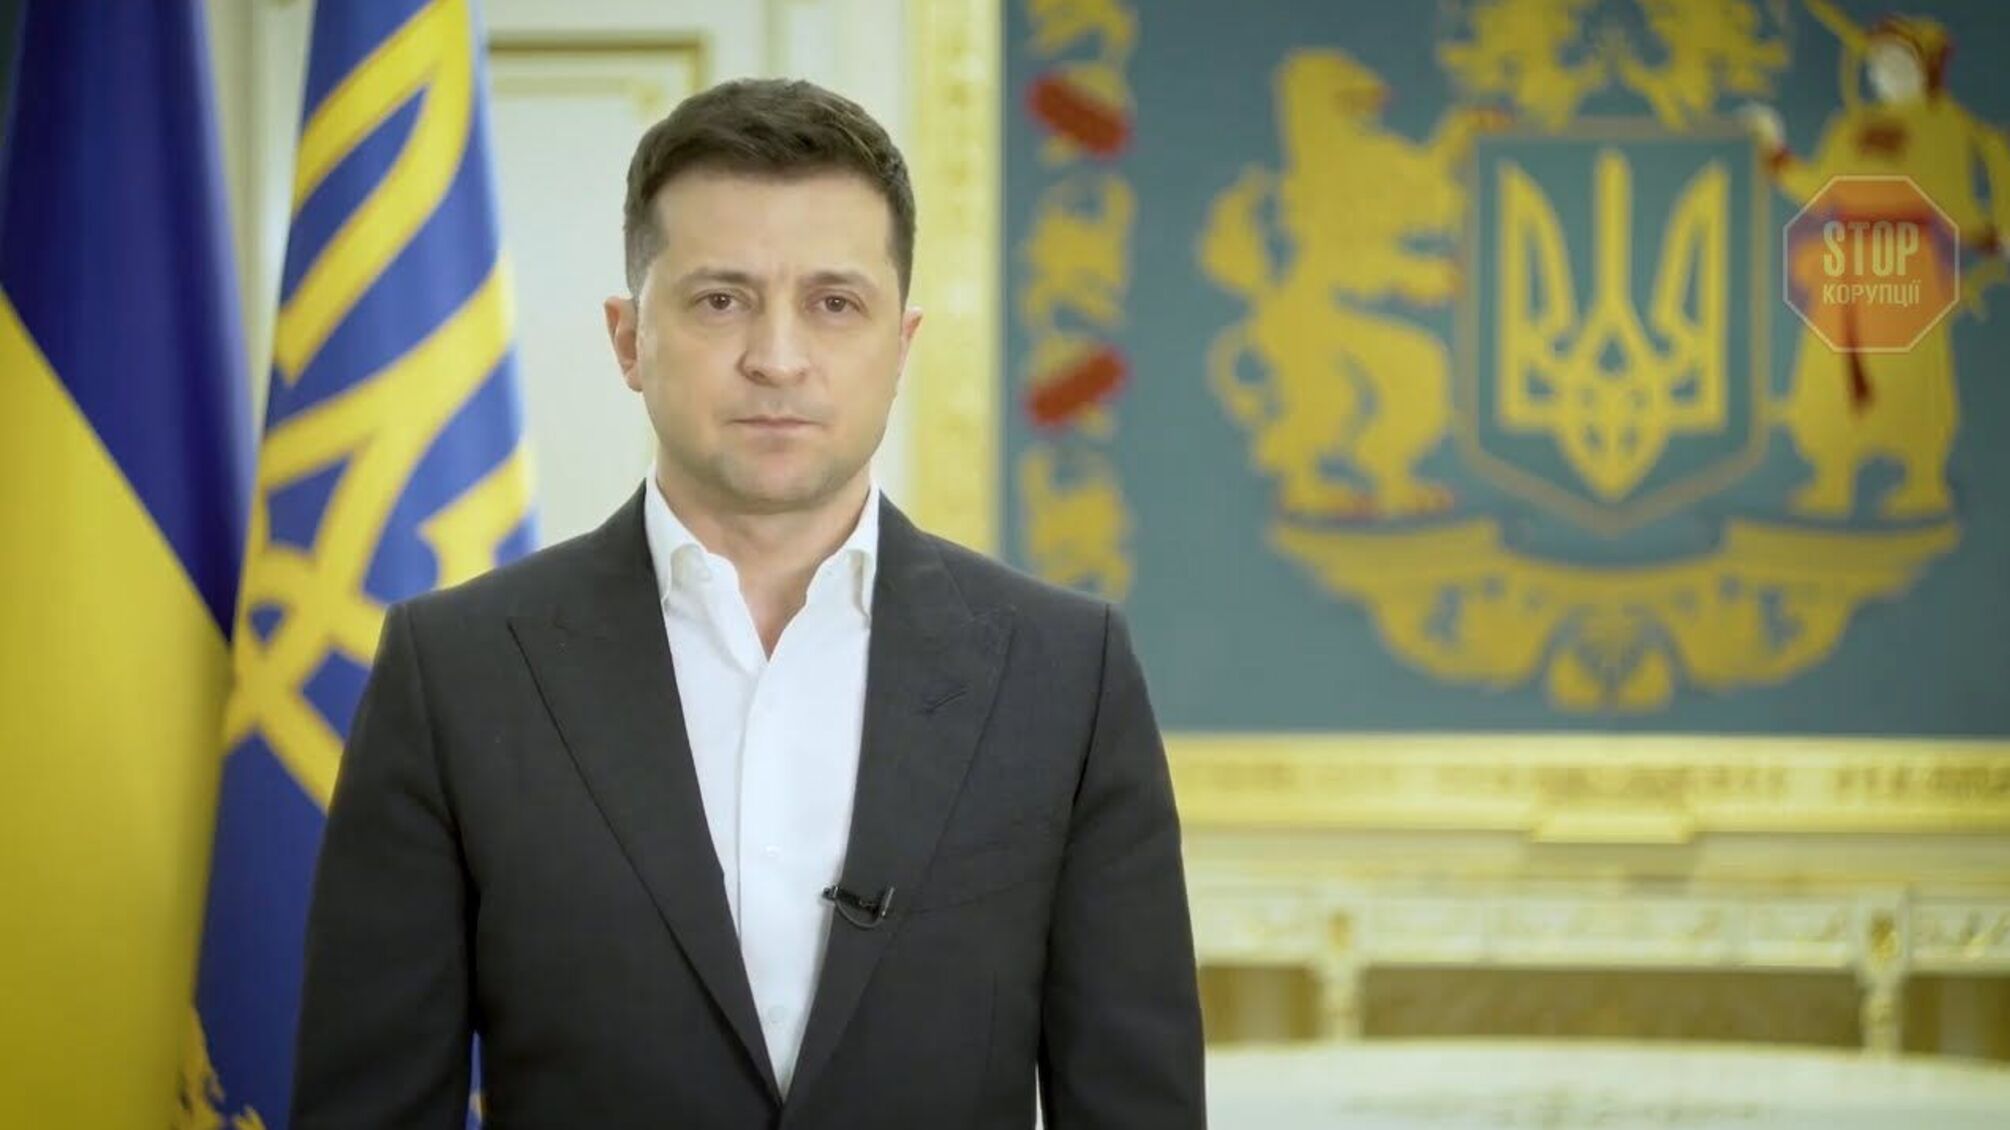 Президент отреагировал на обострение на Донбассе